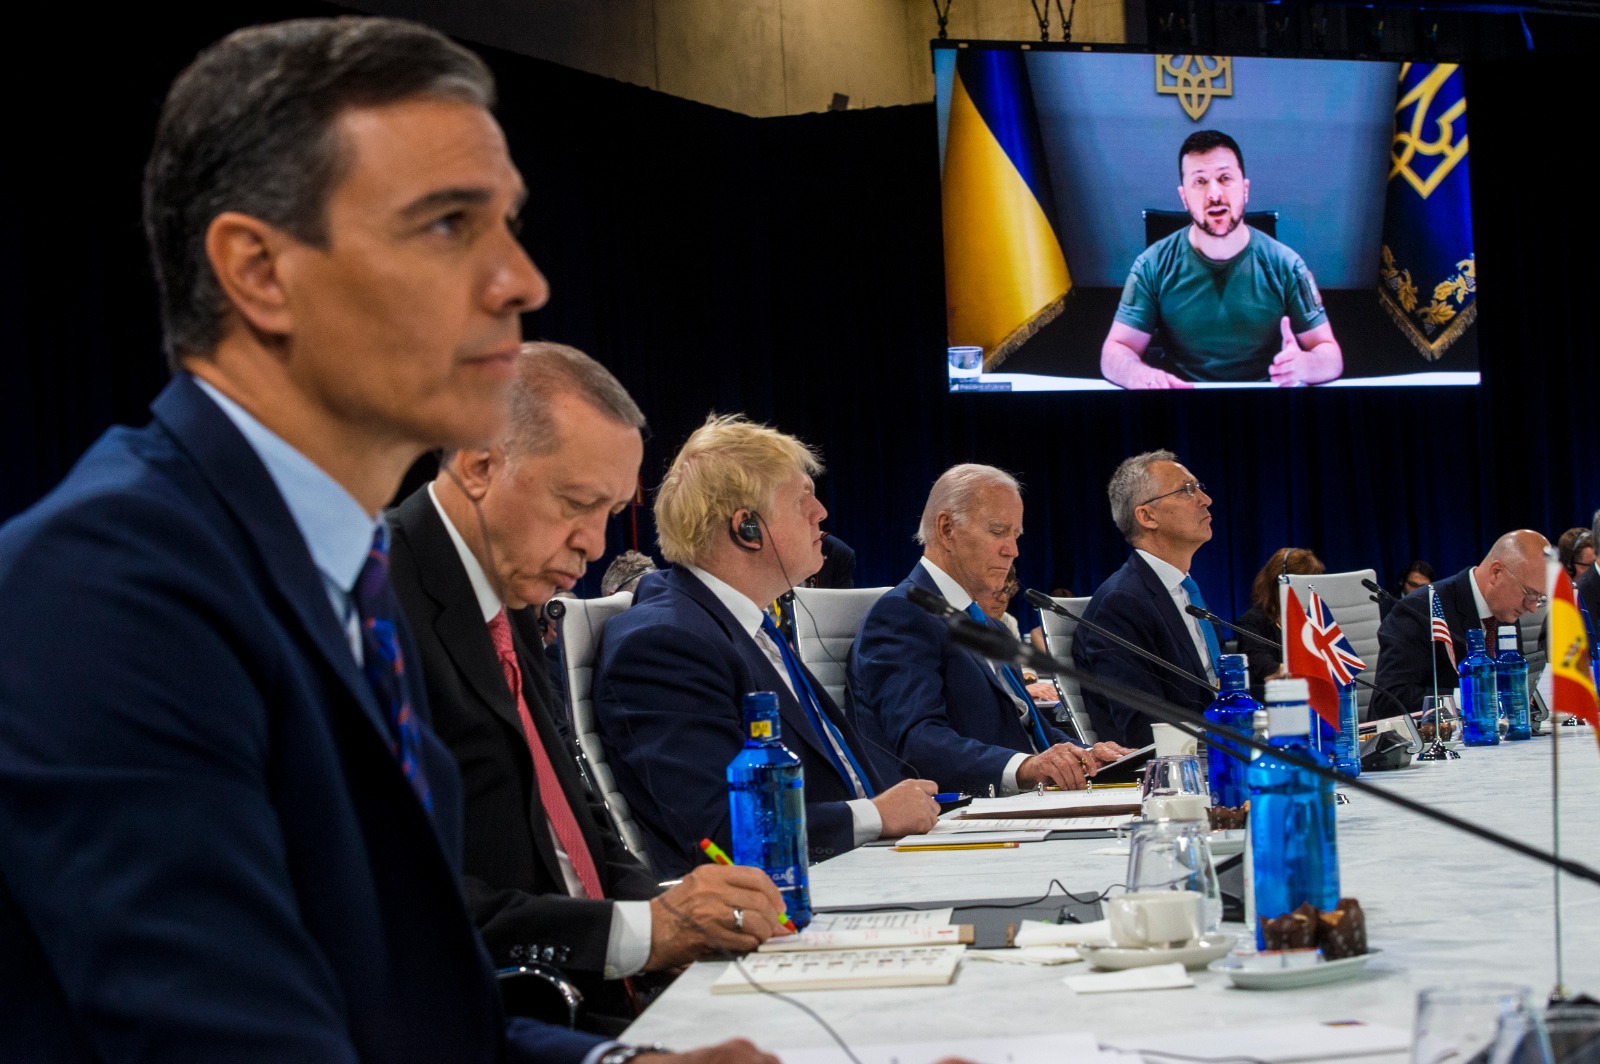 NATOサミット2022の会議で首脳が円形の机に着いている